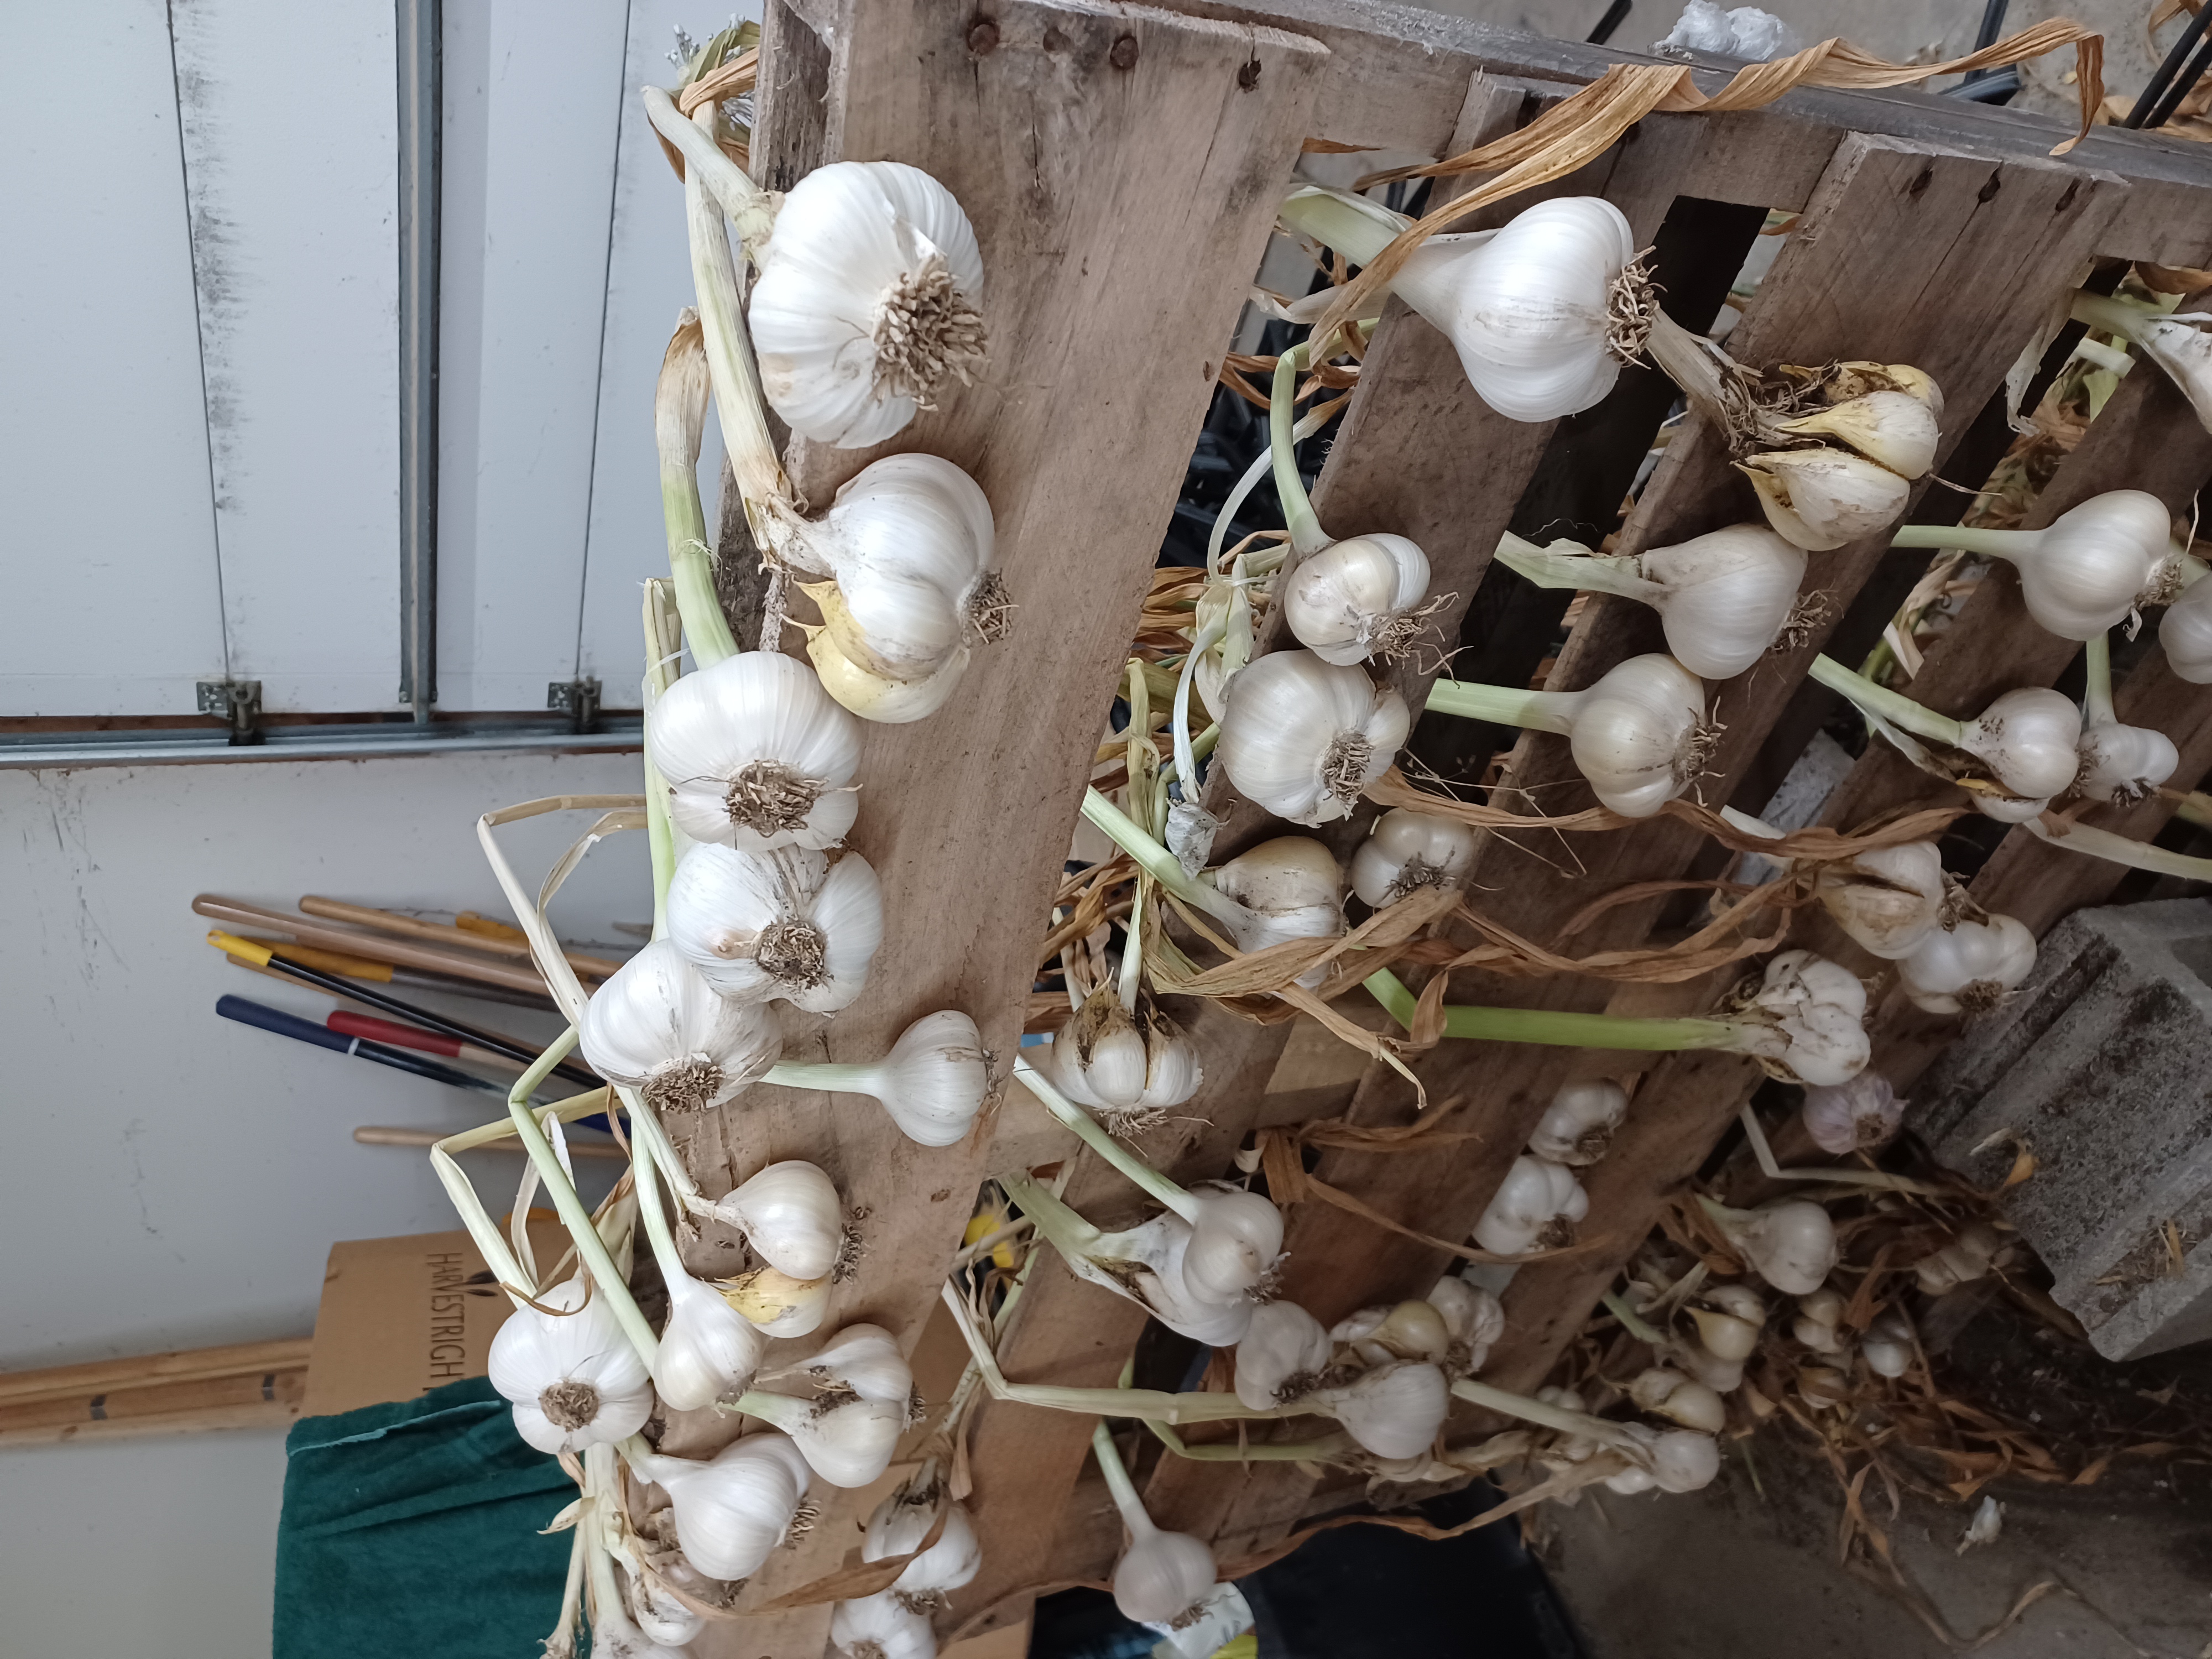 Curing garlic bulbs.